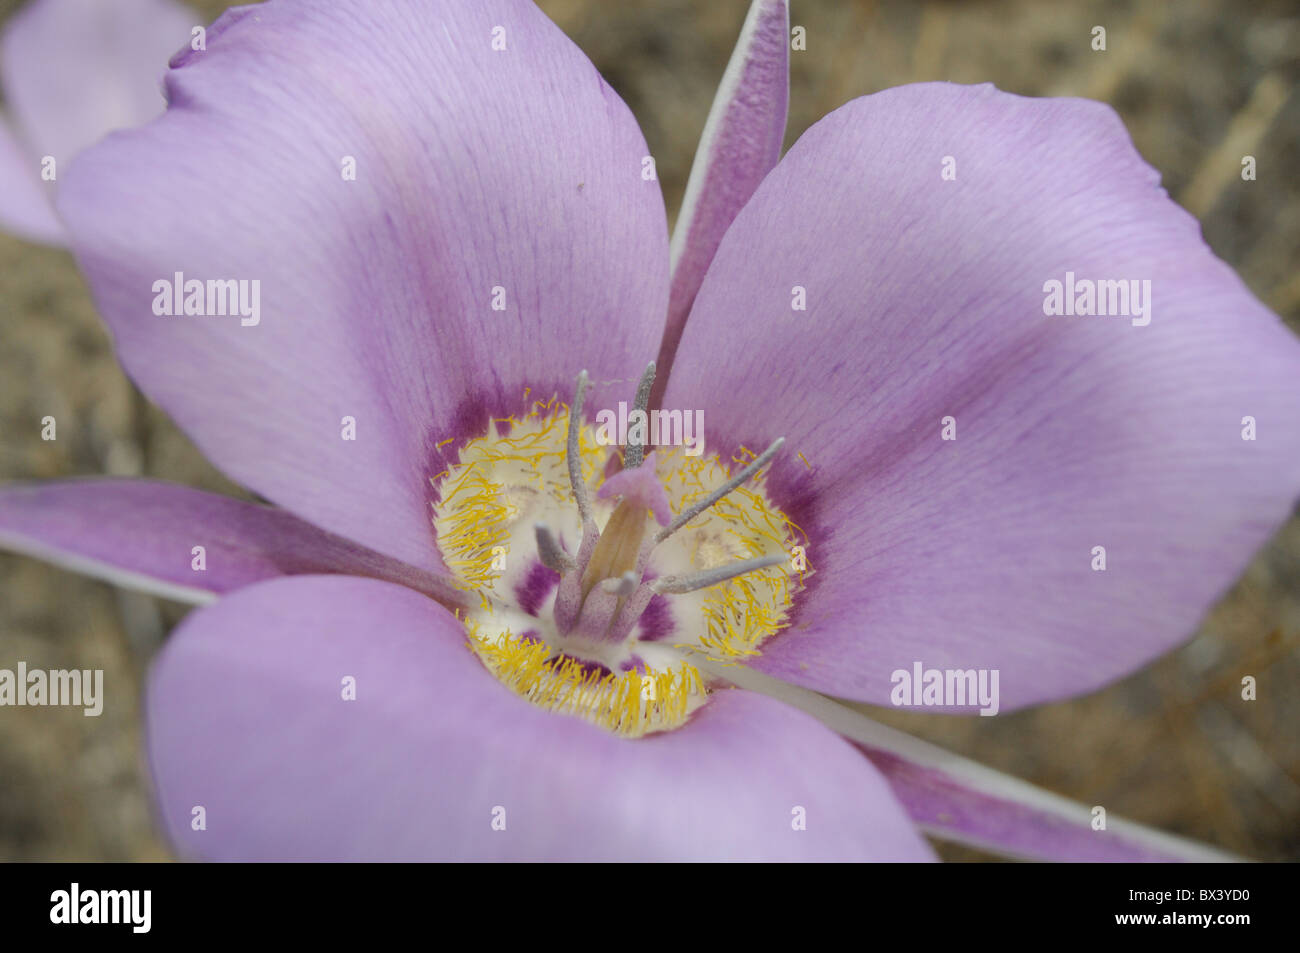 Mariposa lily (Calochortus) Stock Photo